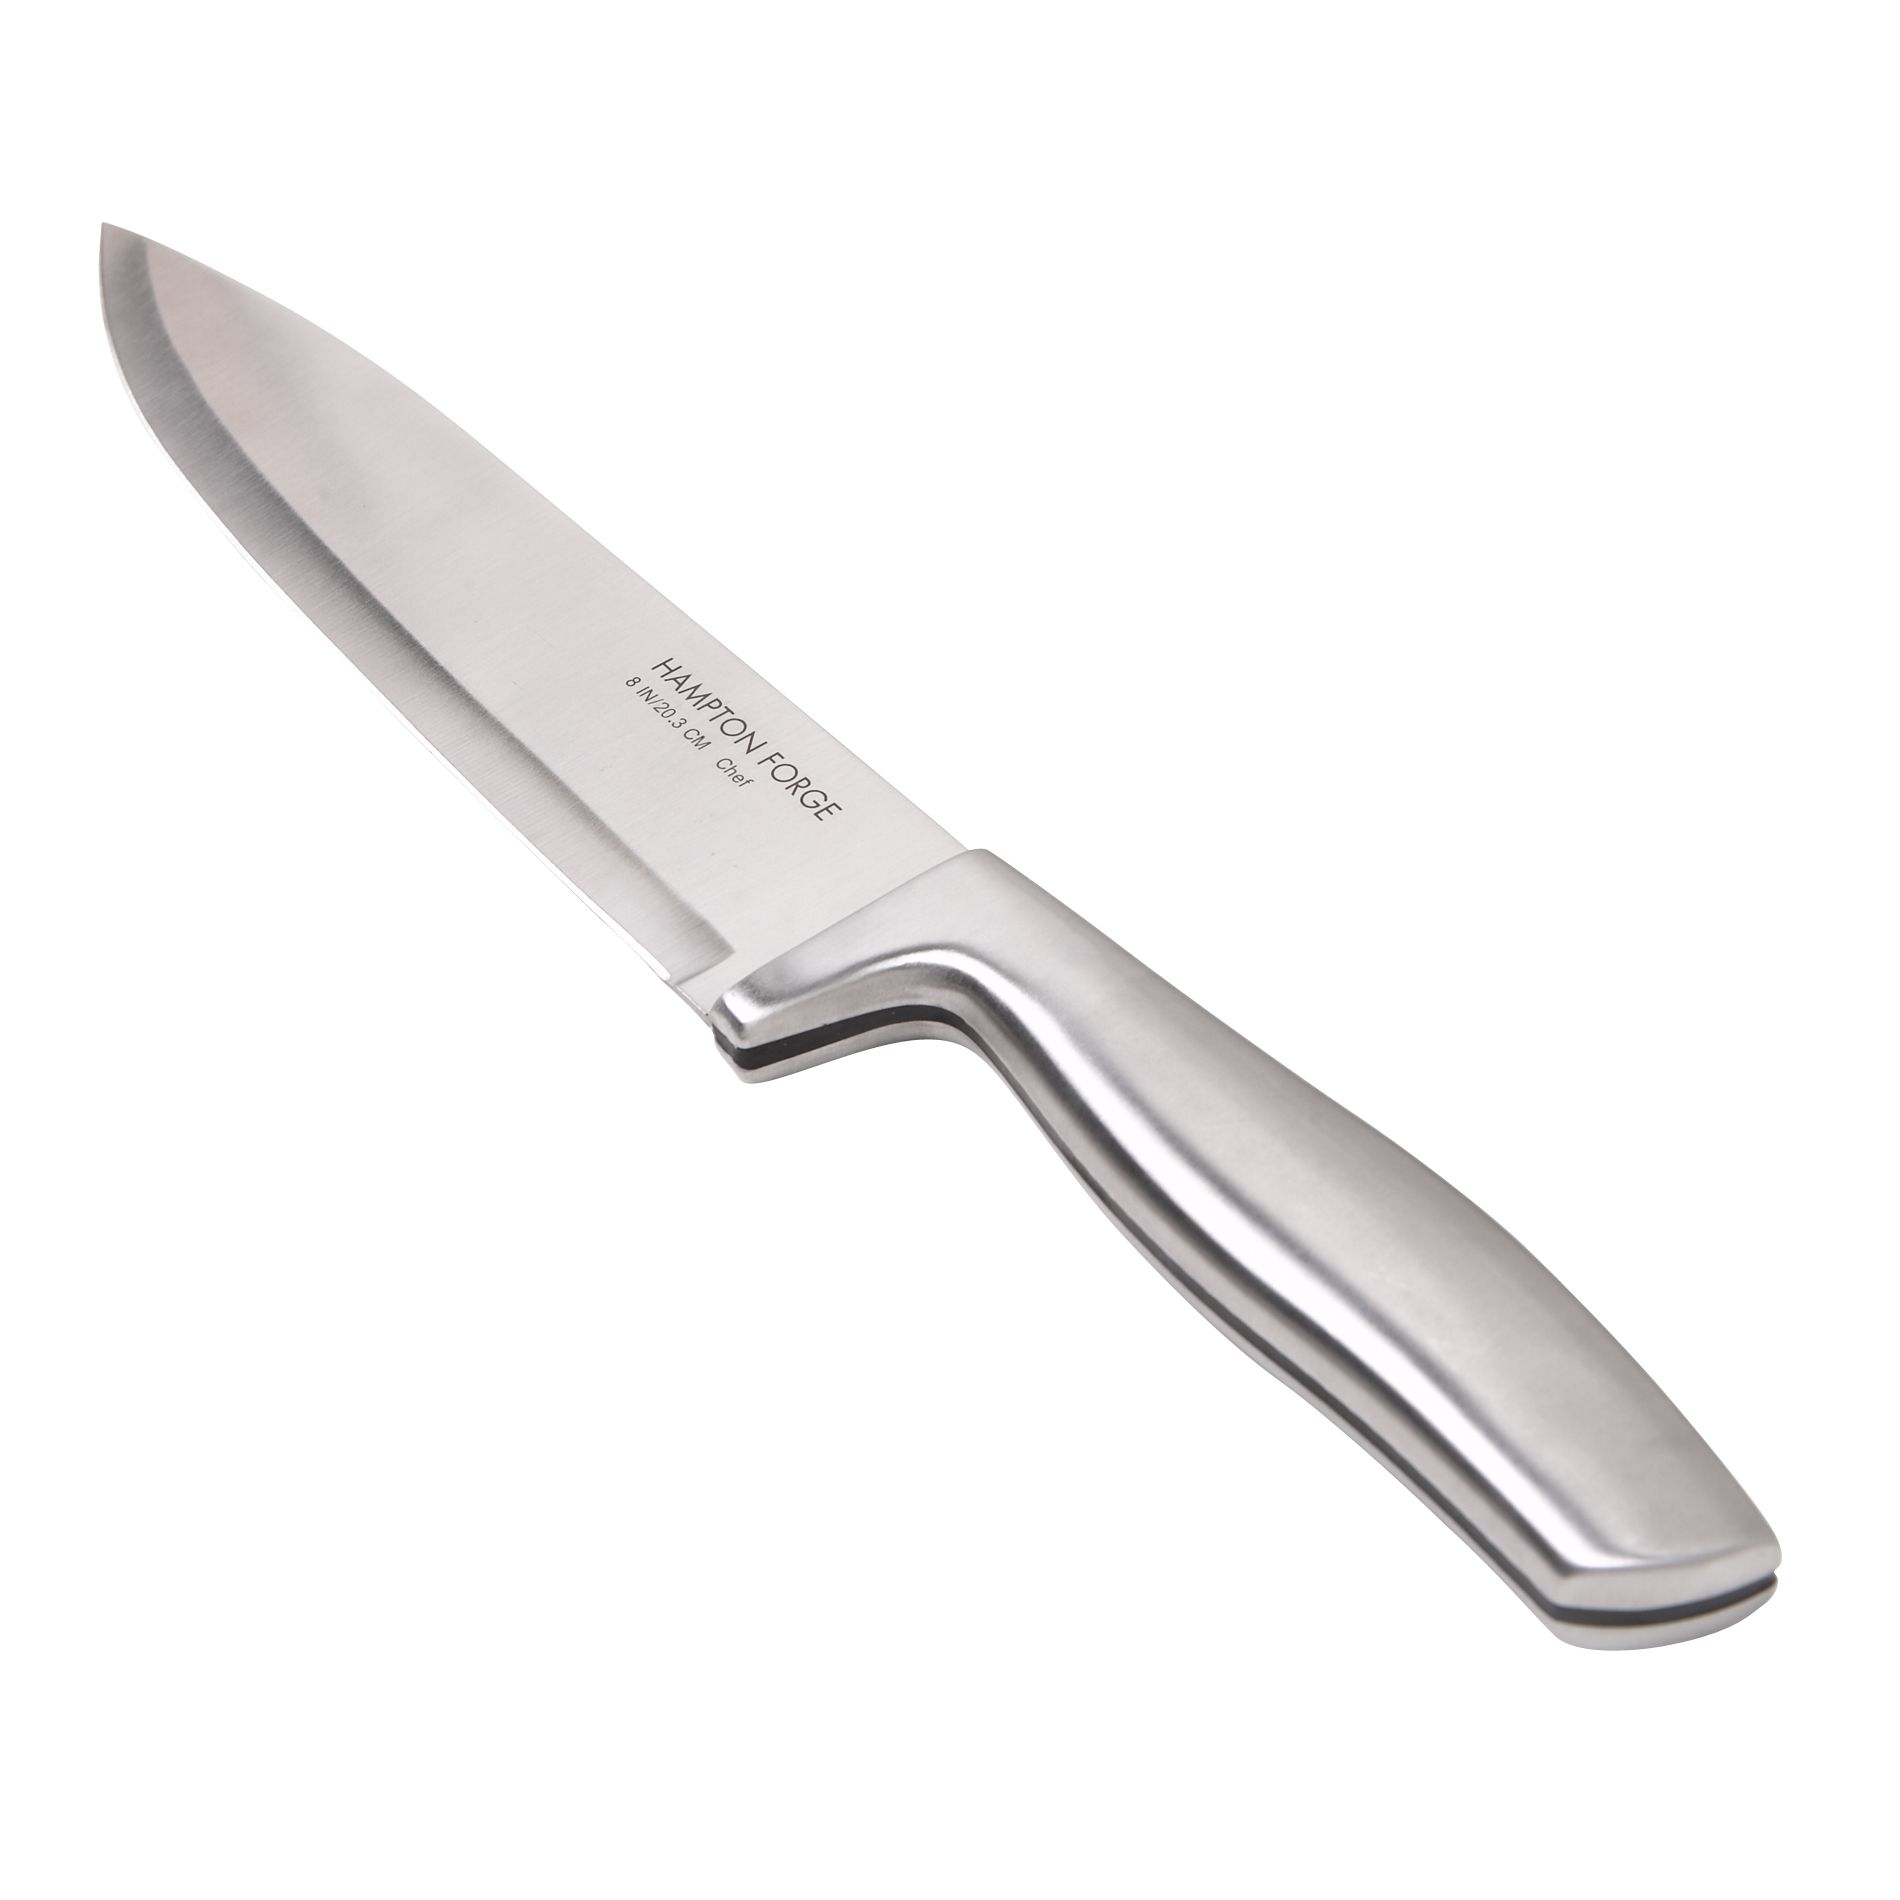 Мет нож. HORECA x30cr13 нож. Разделочный нож Vinzer 89311. Ножи Santoku Knife tima. Нож select HORECA x30.